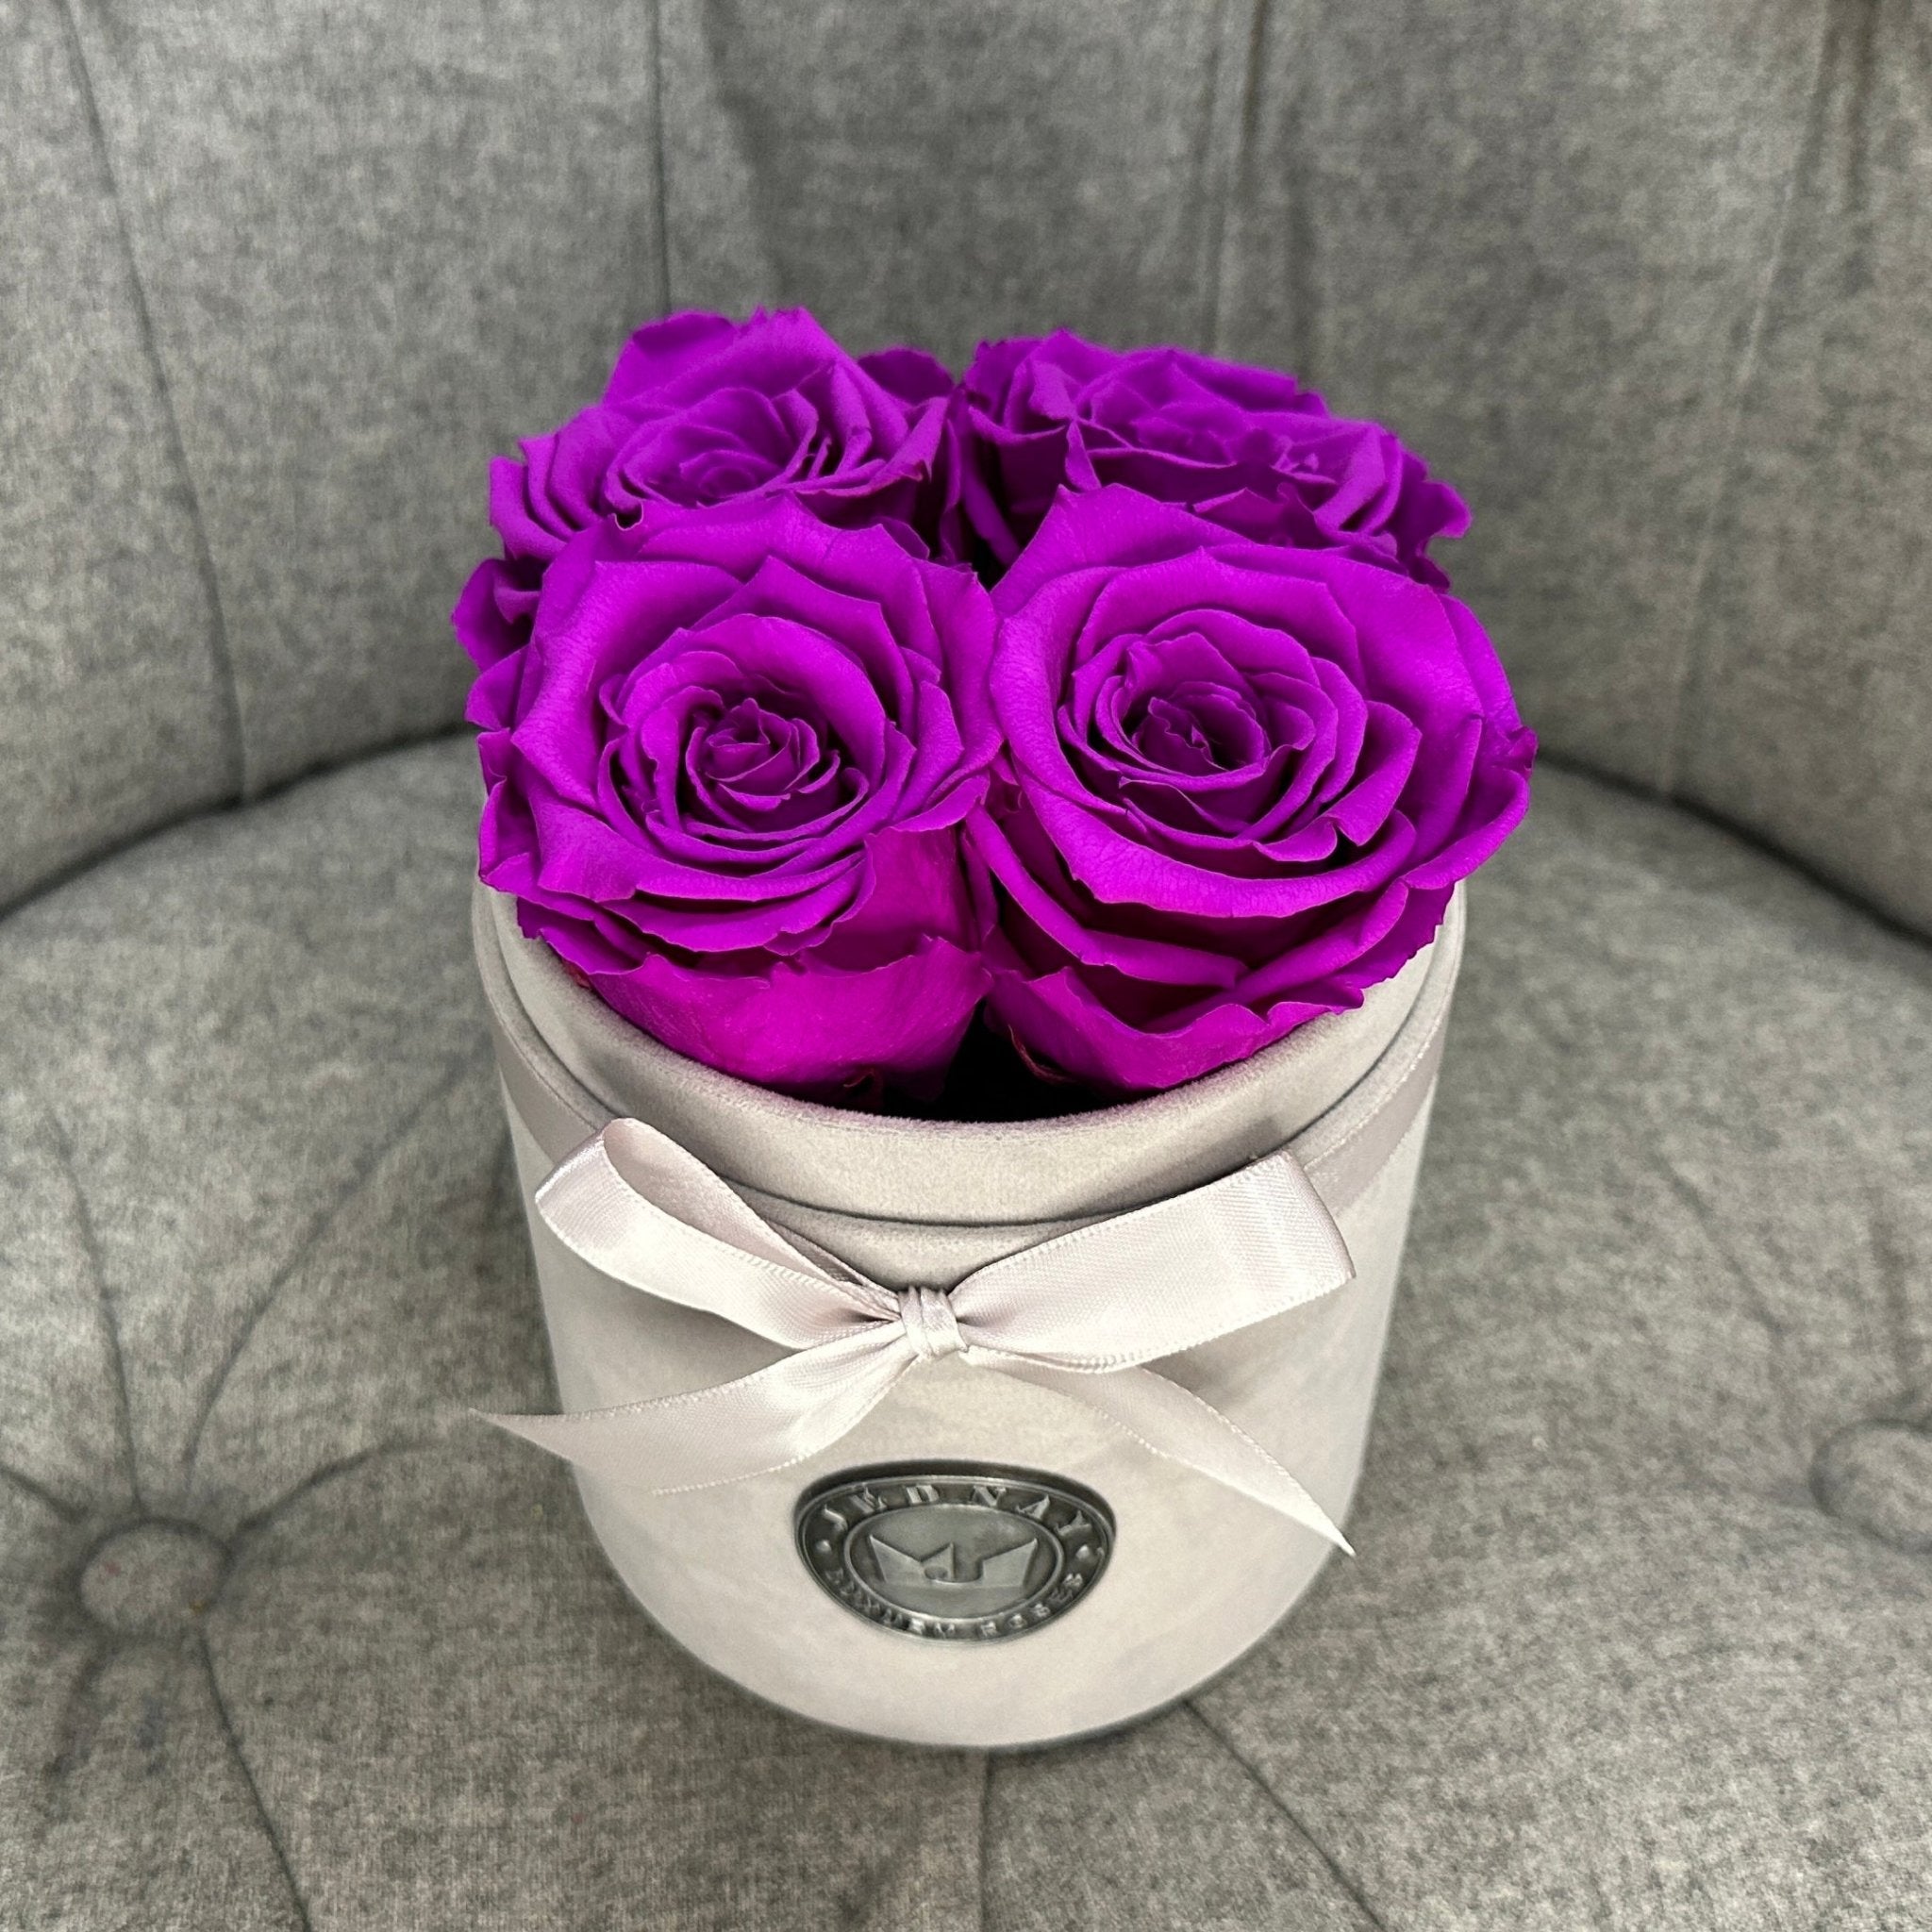 Petite Grey Suede Forever Rose Box - Purple Rain Eternal Roses - Jednay Roses